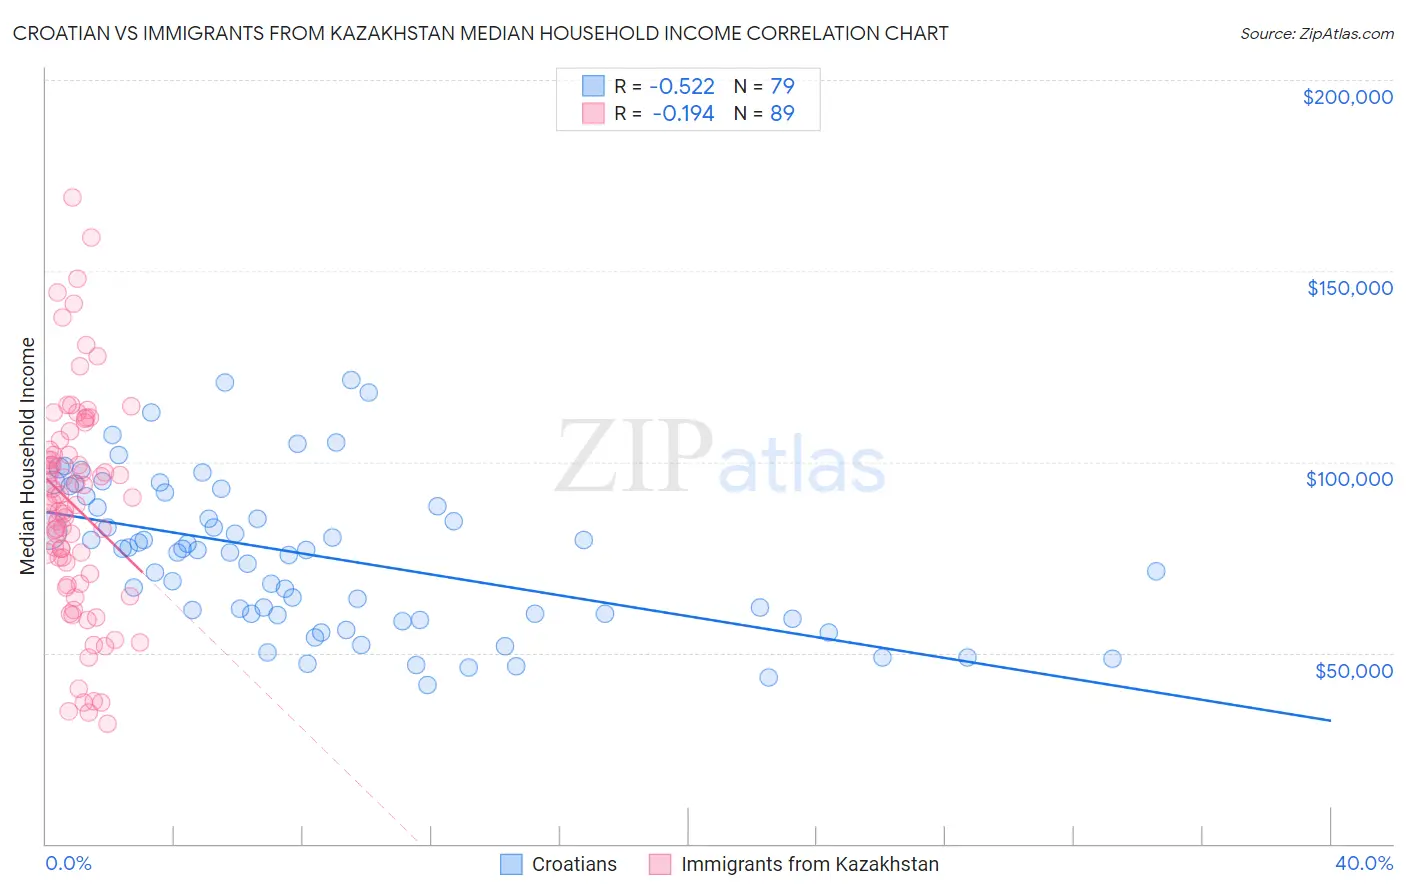 Croatian vs Immigrants from Kazakhstan Median Household Income